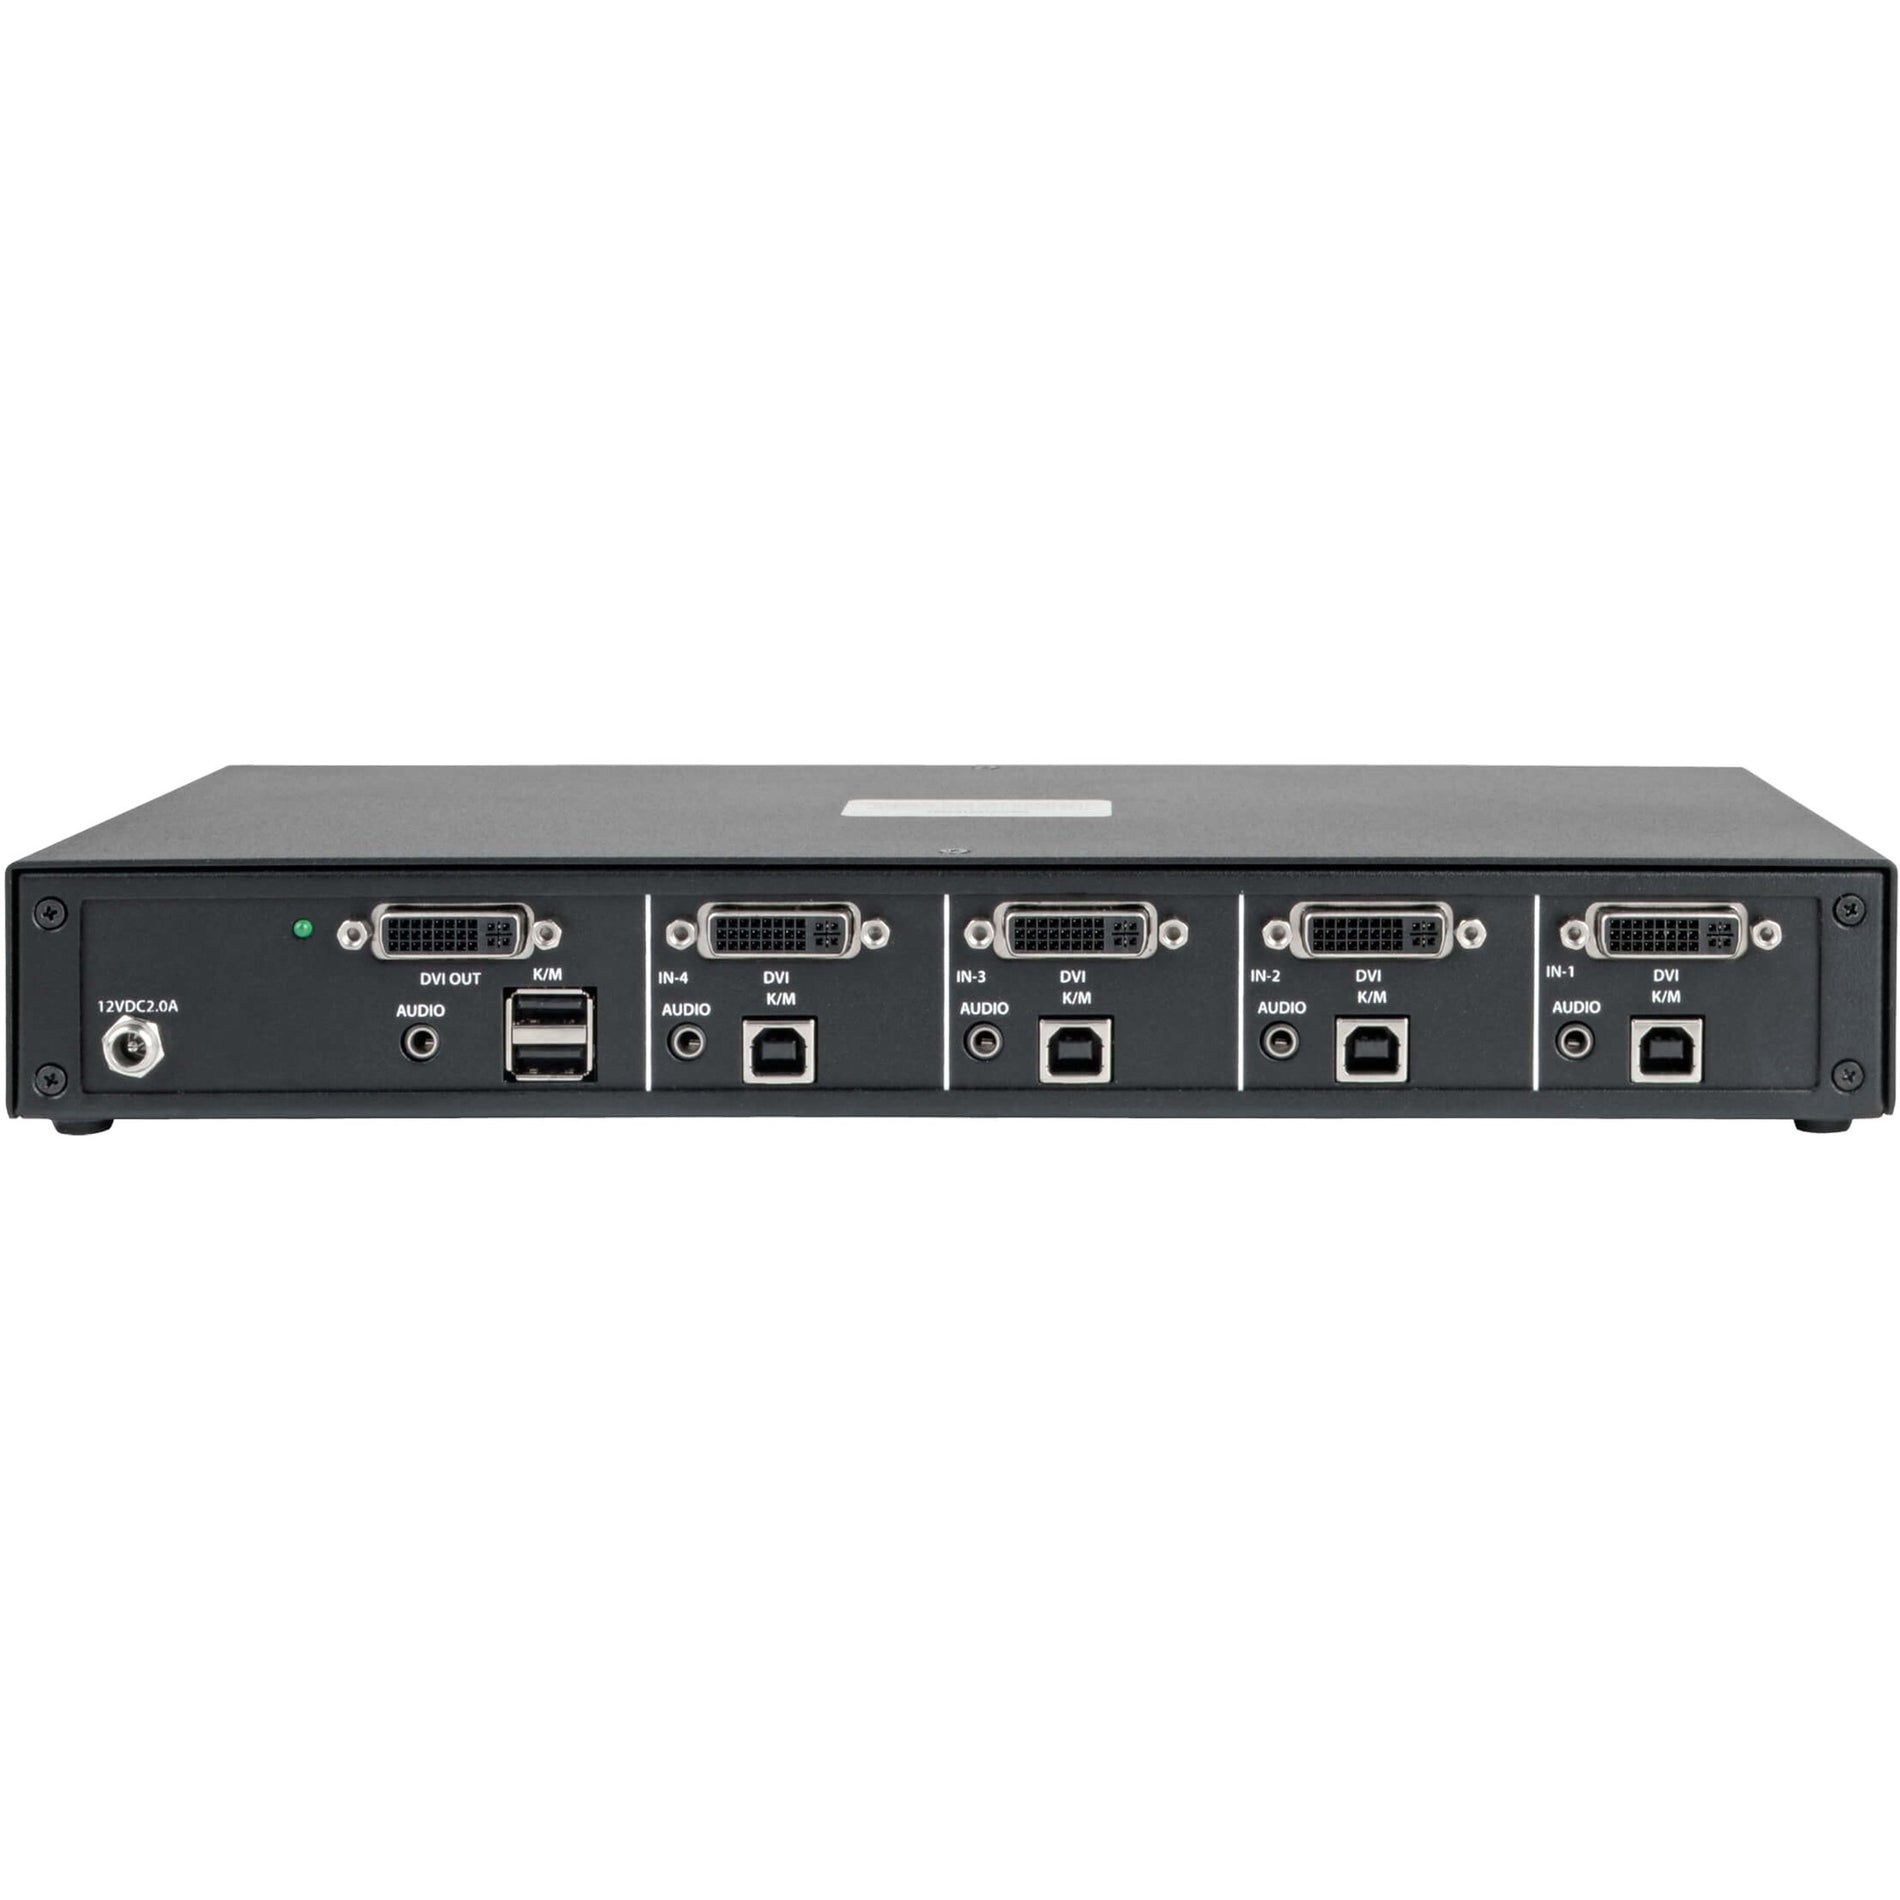 Tripp Lite B002-DV1A4 4-Port NIAP PP3.0-Certified DVI-I KVM Switch, Maximum Video Resolution 2560 x 1600, 3 Year Warranty